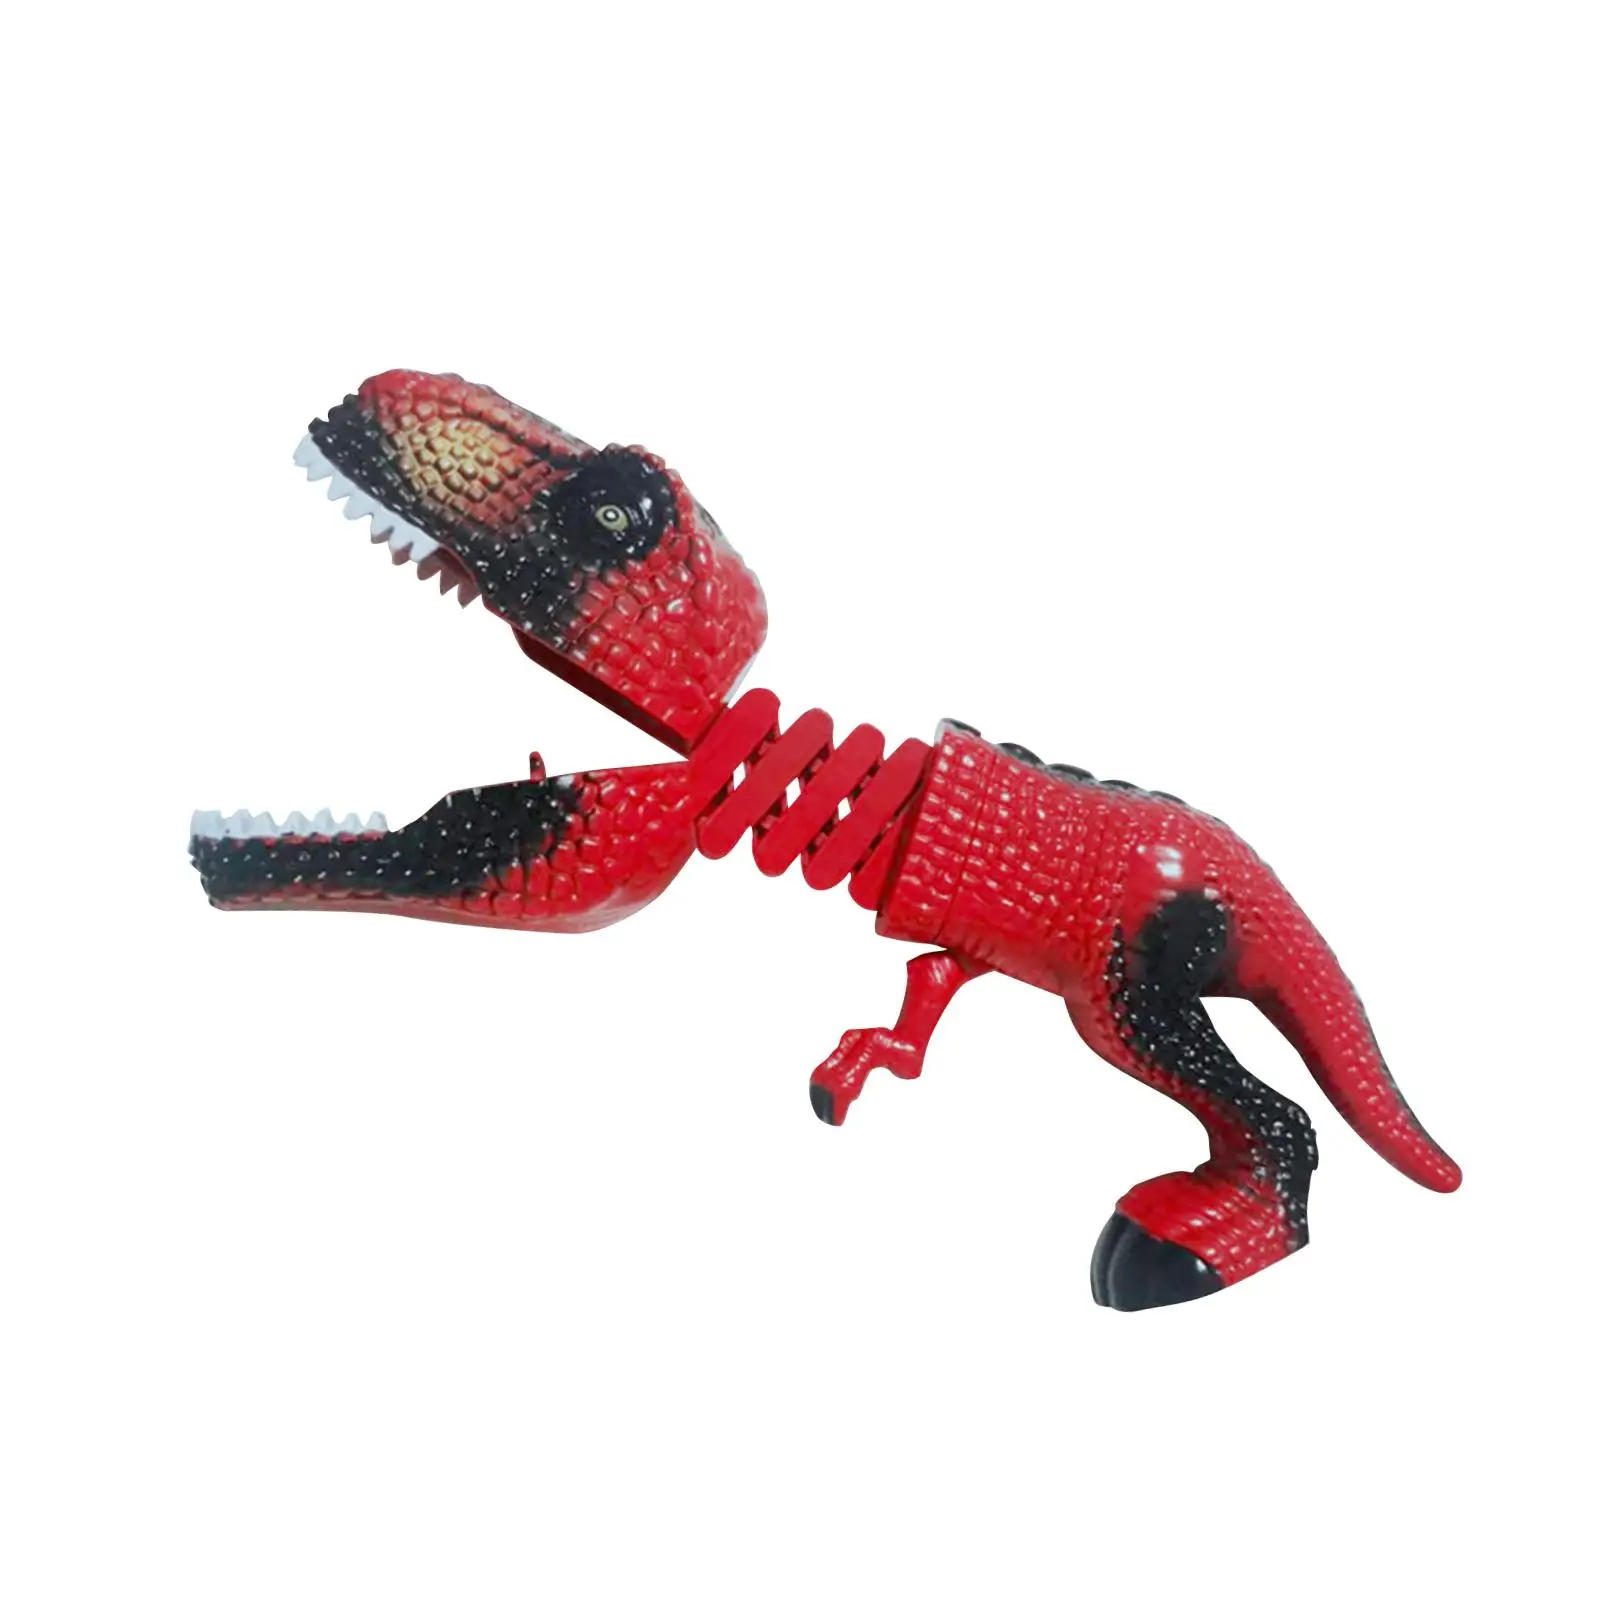 Dinosaur Animal Figures Hand Grabber Dinosaur Toy Grabber Claw Game for Kids